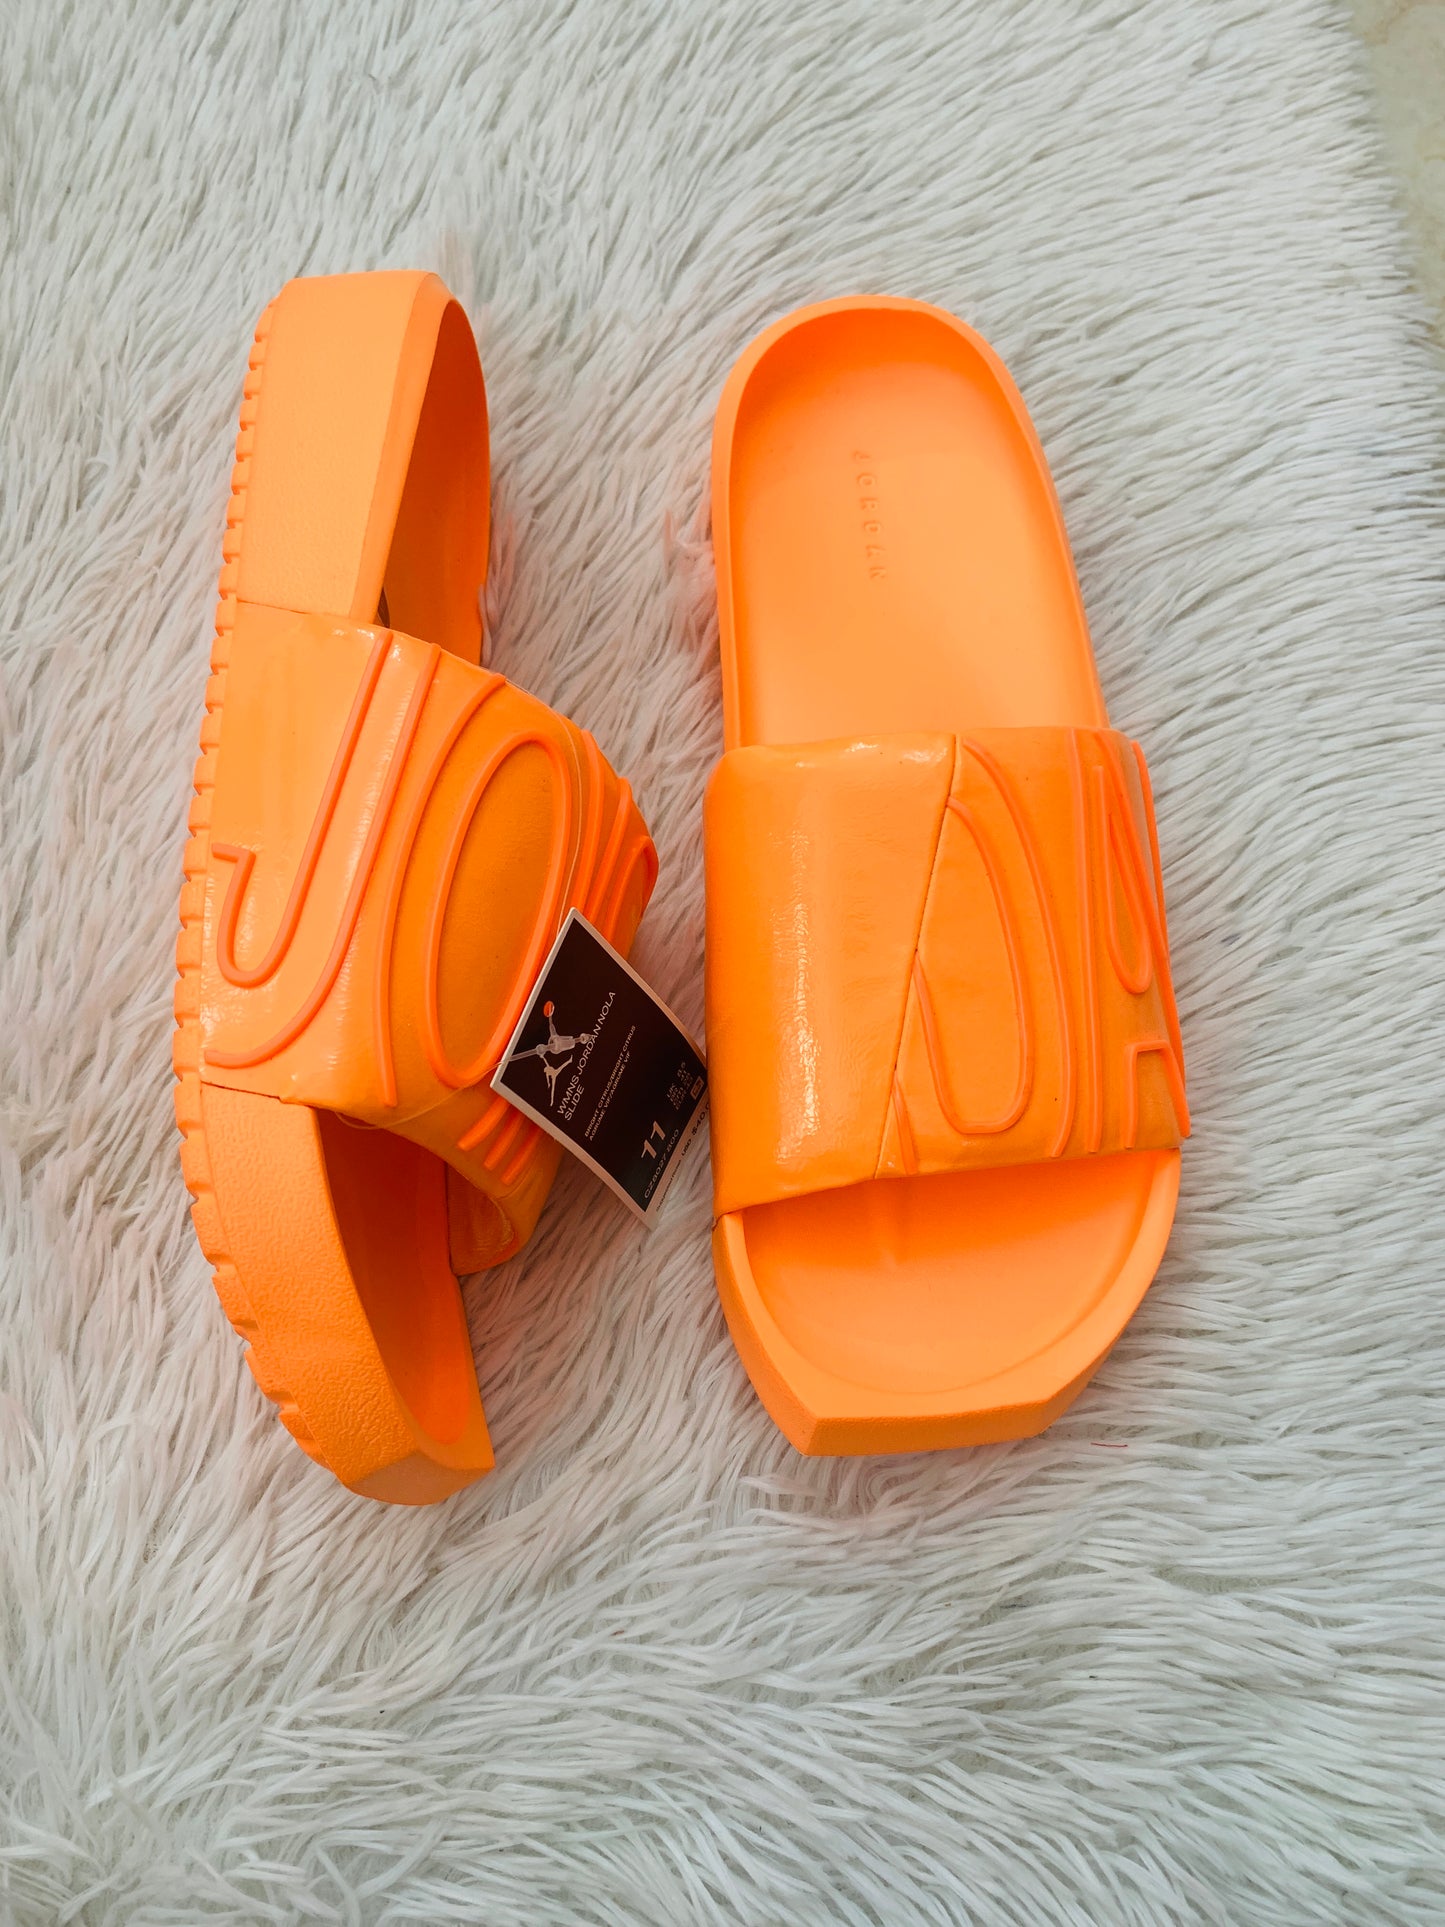 Sandalias Jordan original en color naranja diseño de letras JOR.